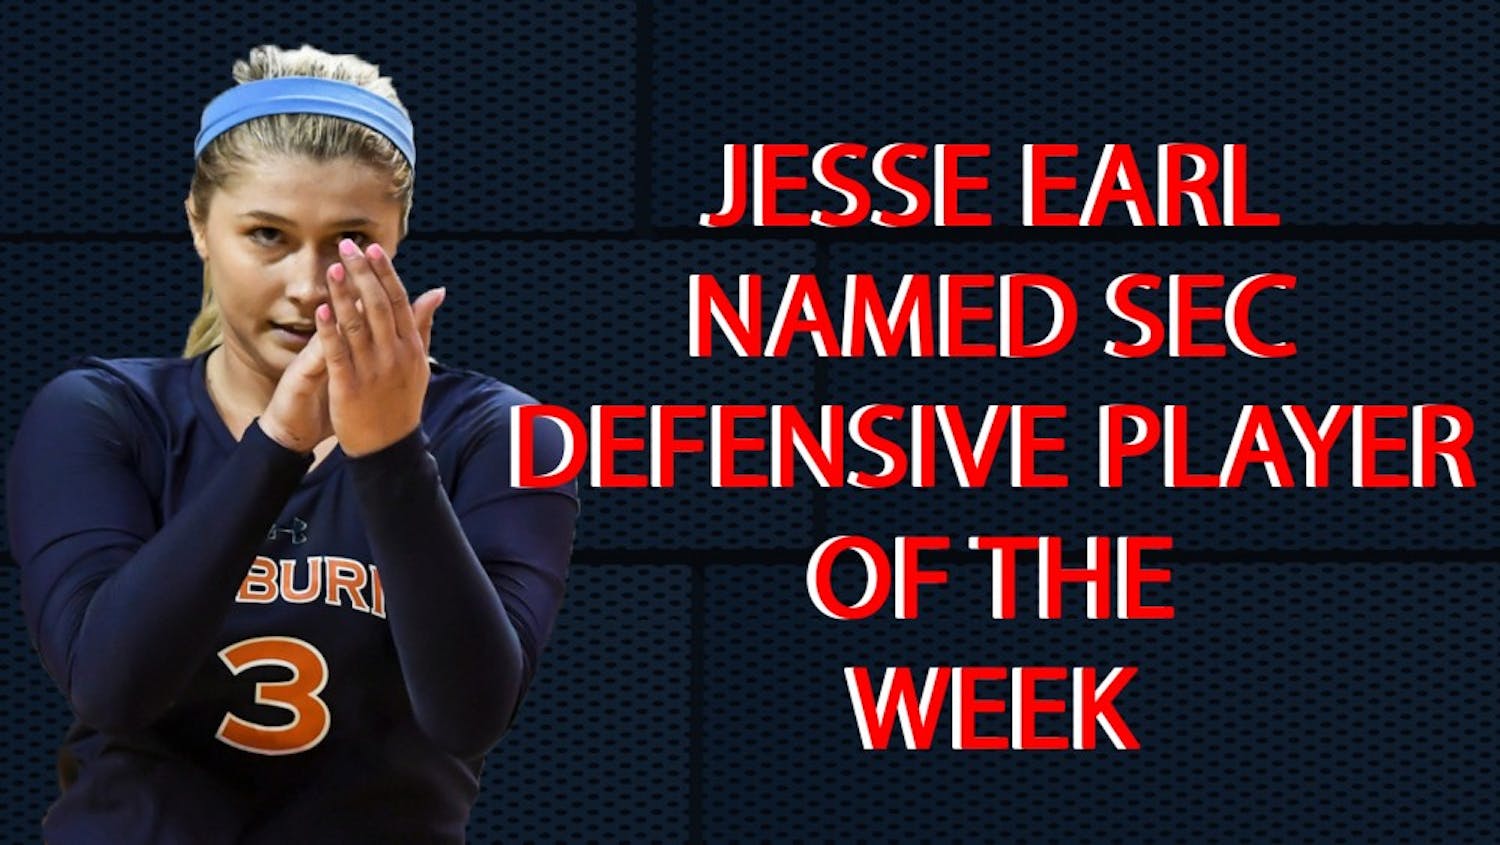 Jesse Earl Named SEC Defensive Player of the Week